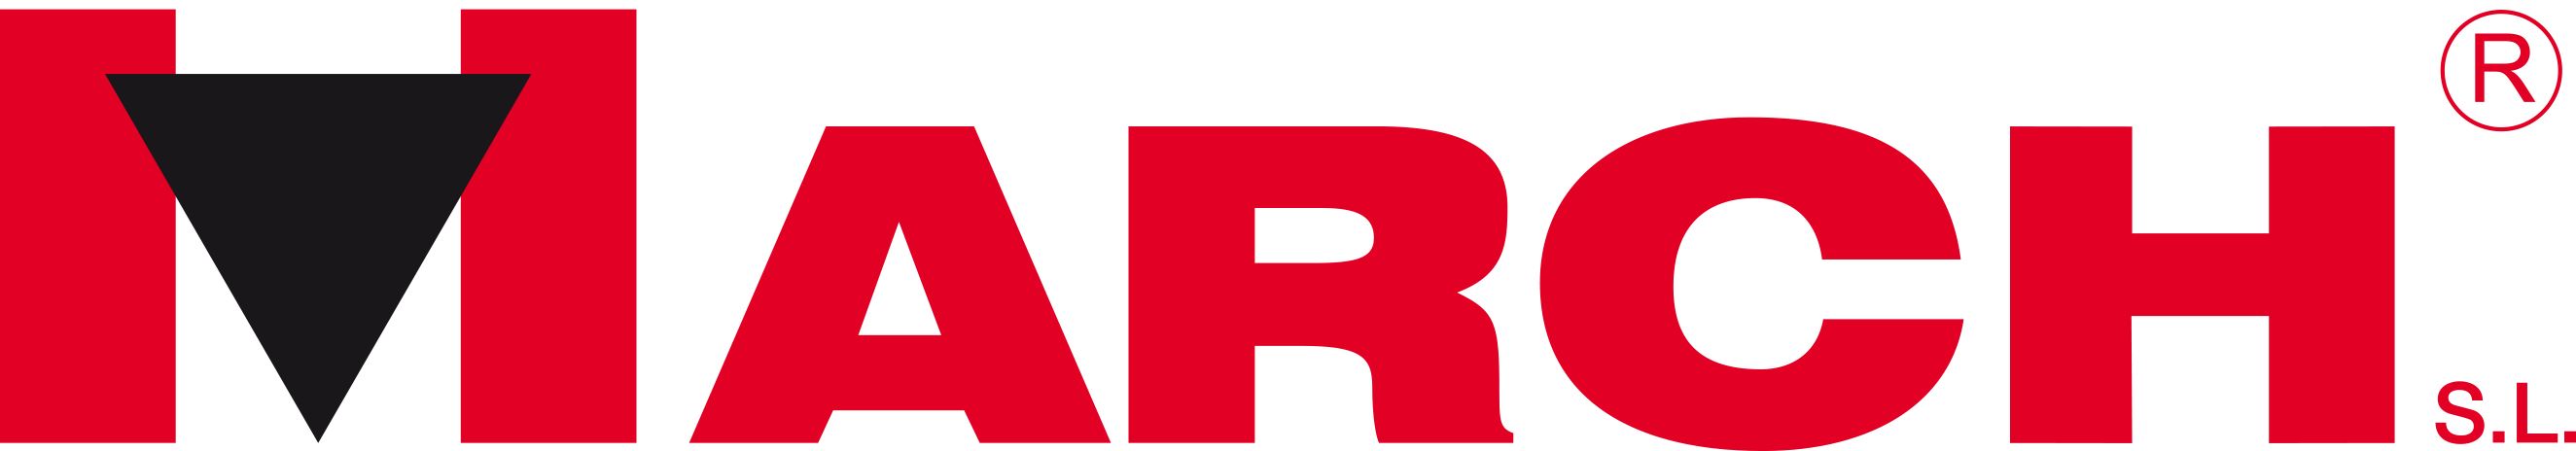 Talleres-March-logotipo